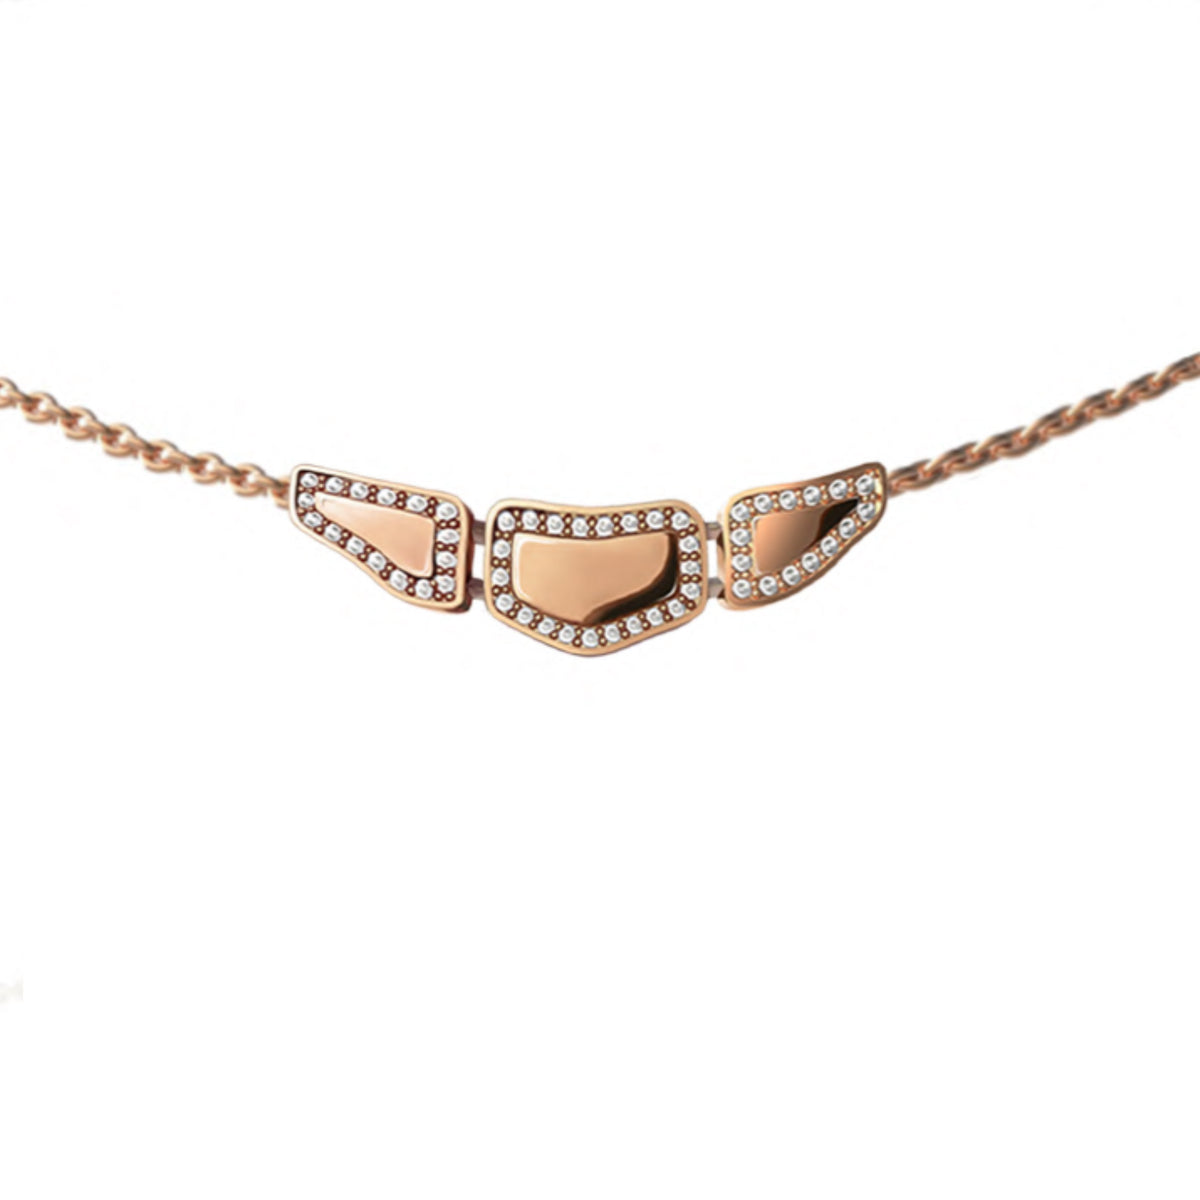 SKIN DIAMOND PENDANT 3 ELEMENTS ROSE GOLD | Necklace | 18K rose gold, crocodream, diamonds, Necklace, pendant, skin | ORLOV